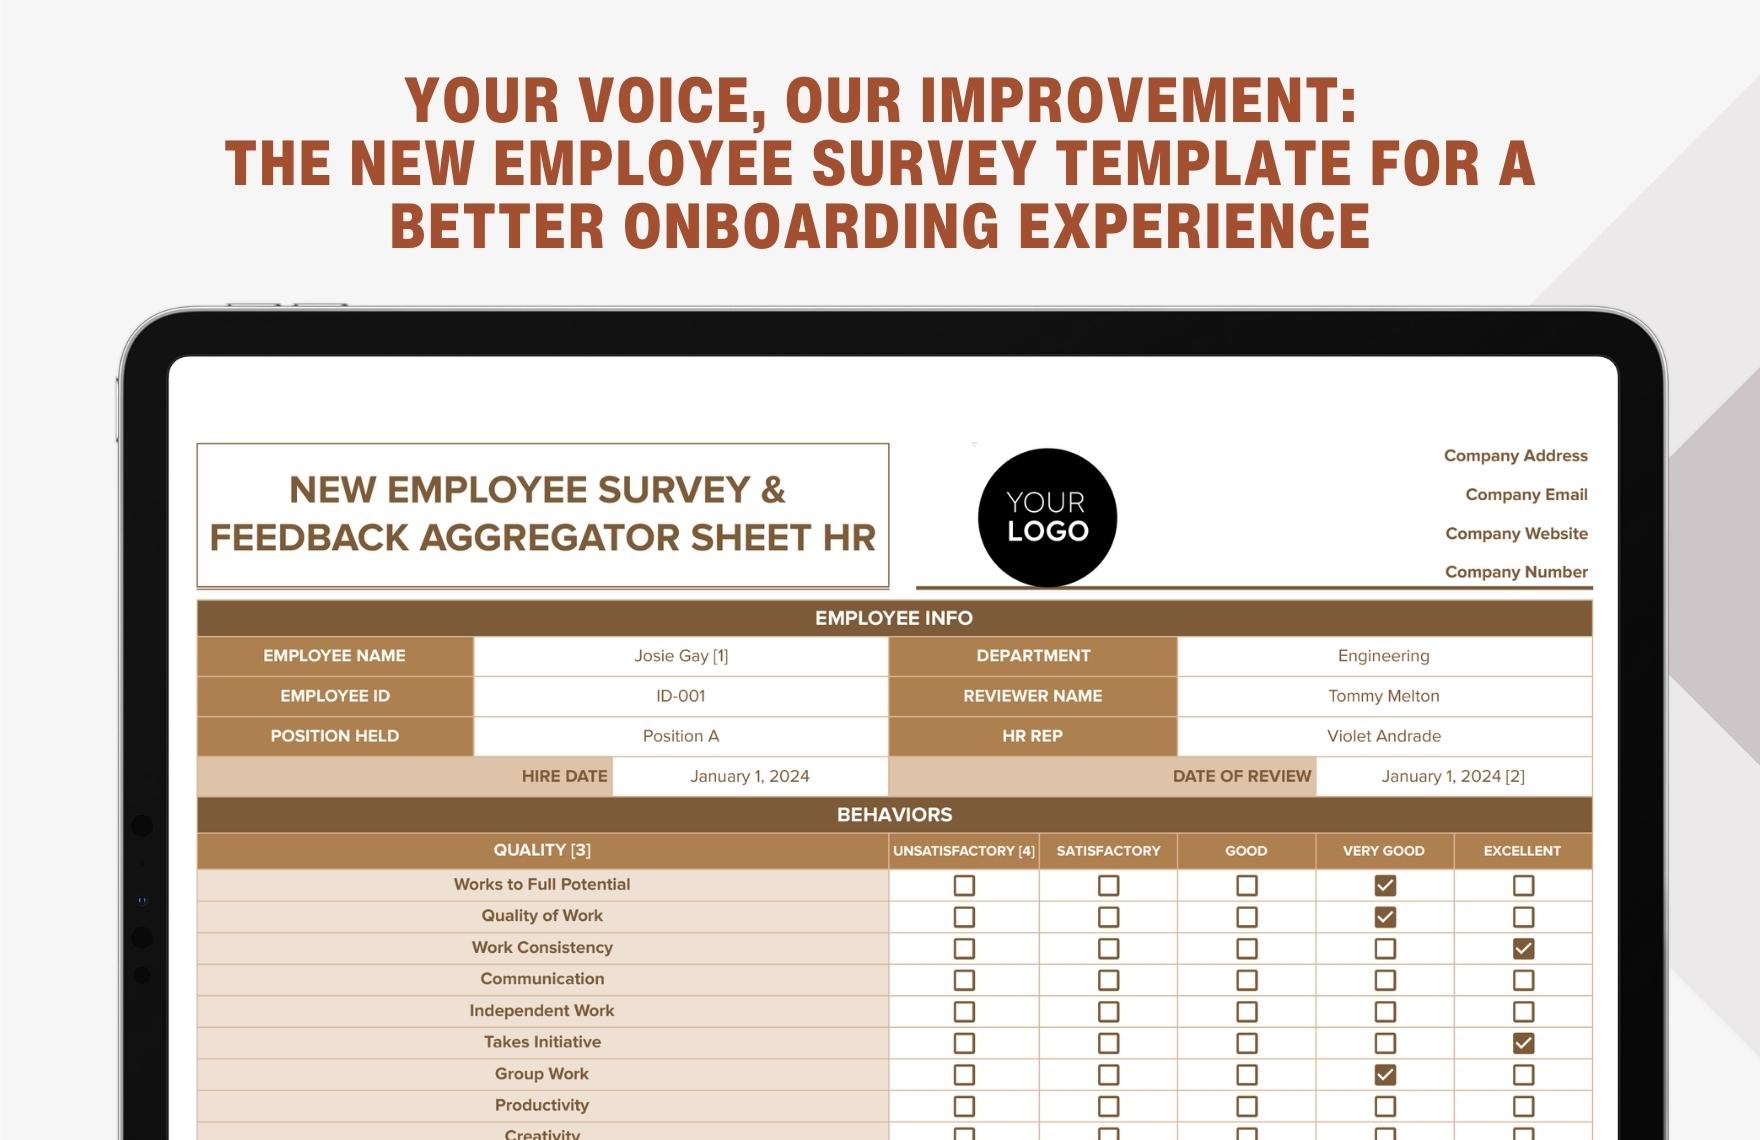 New Employee Survey & Feedback Aggregator Sheet HR Template